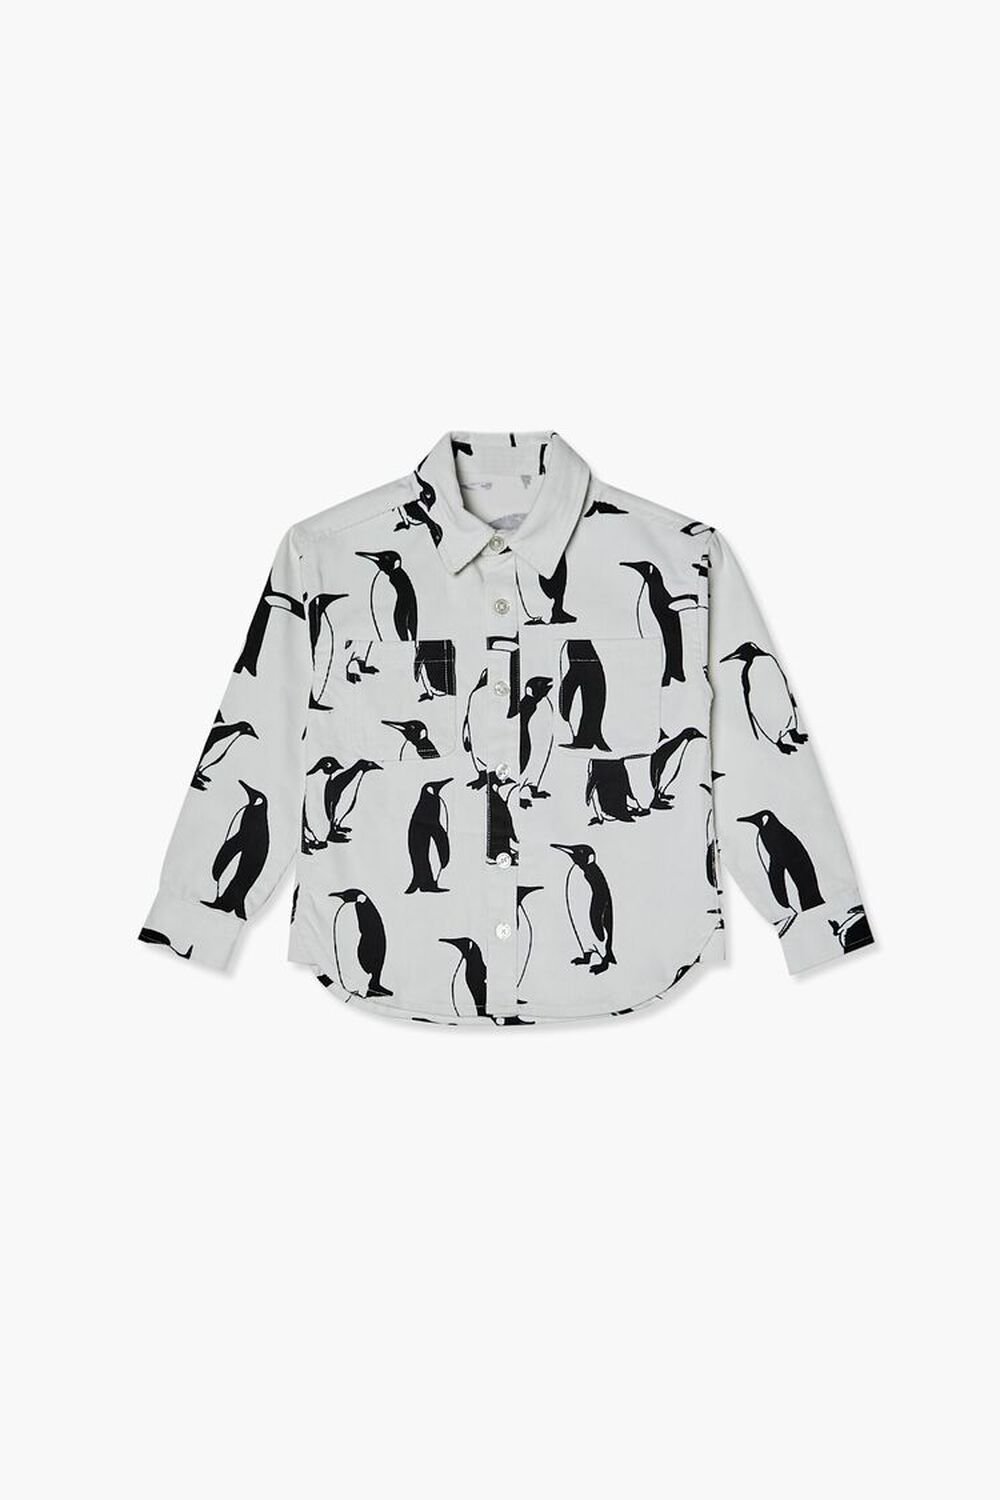 CREAM/BLACK Kids Penguin Print Shirt (Girls + Boys), image 1